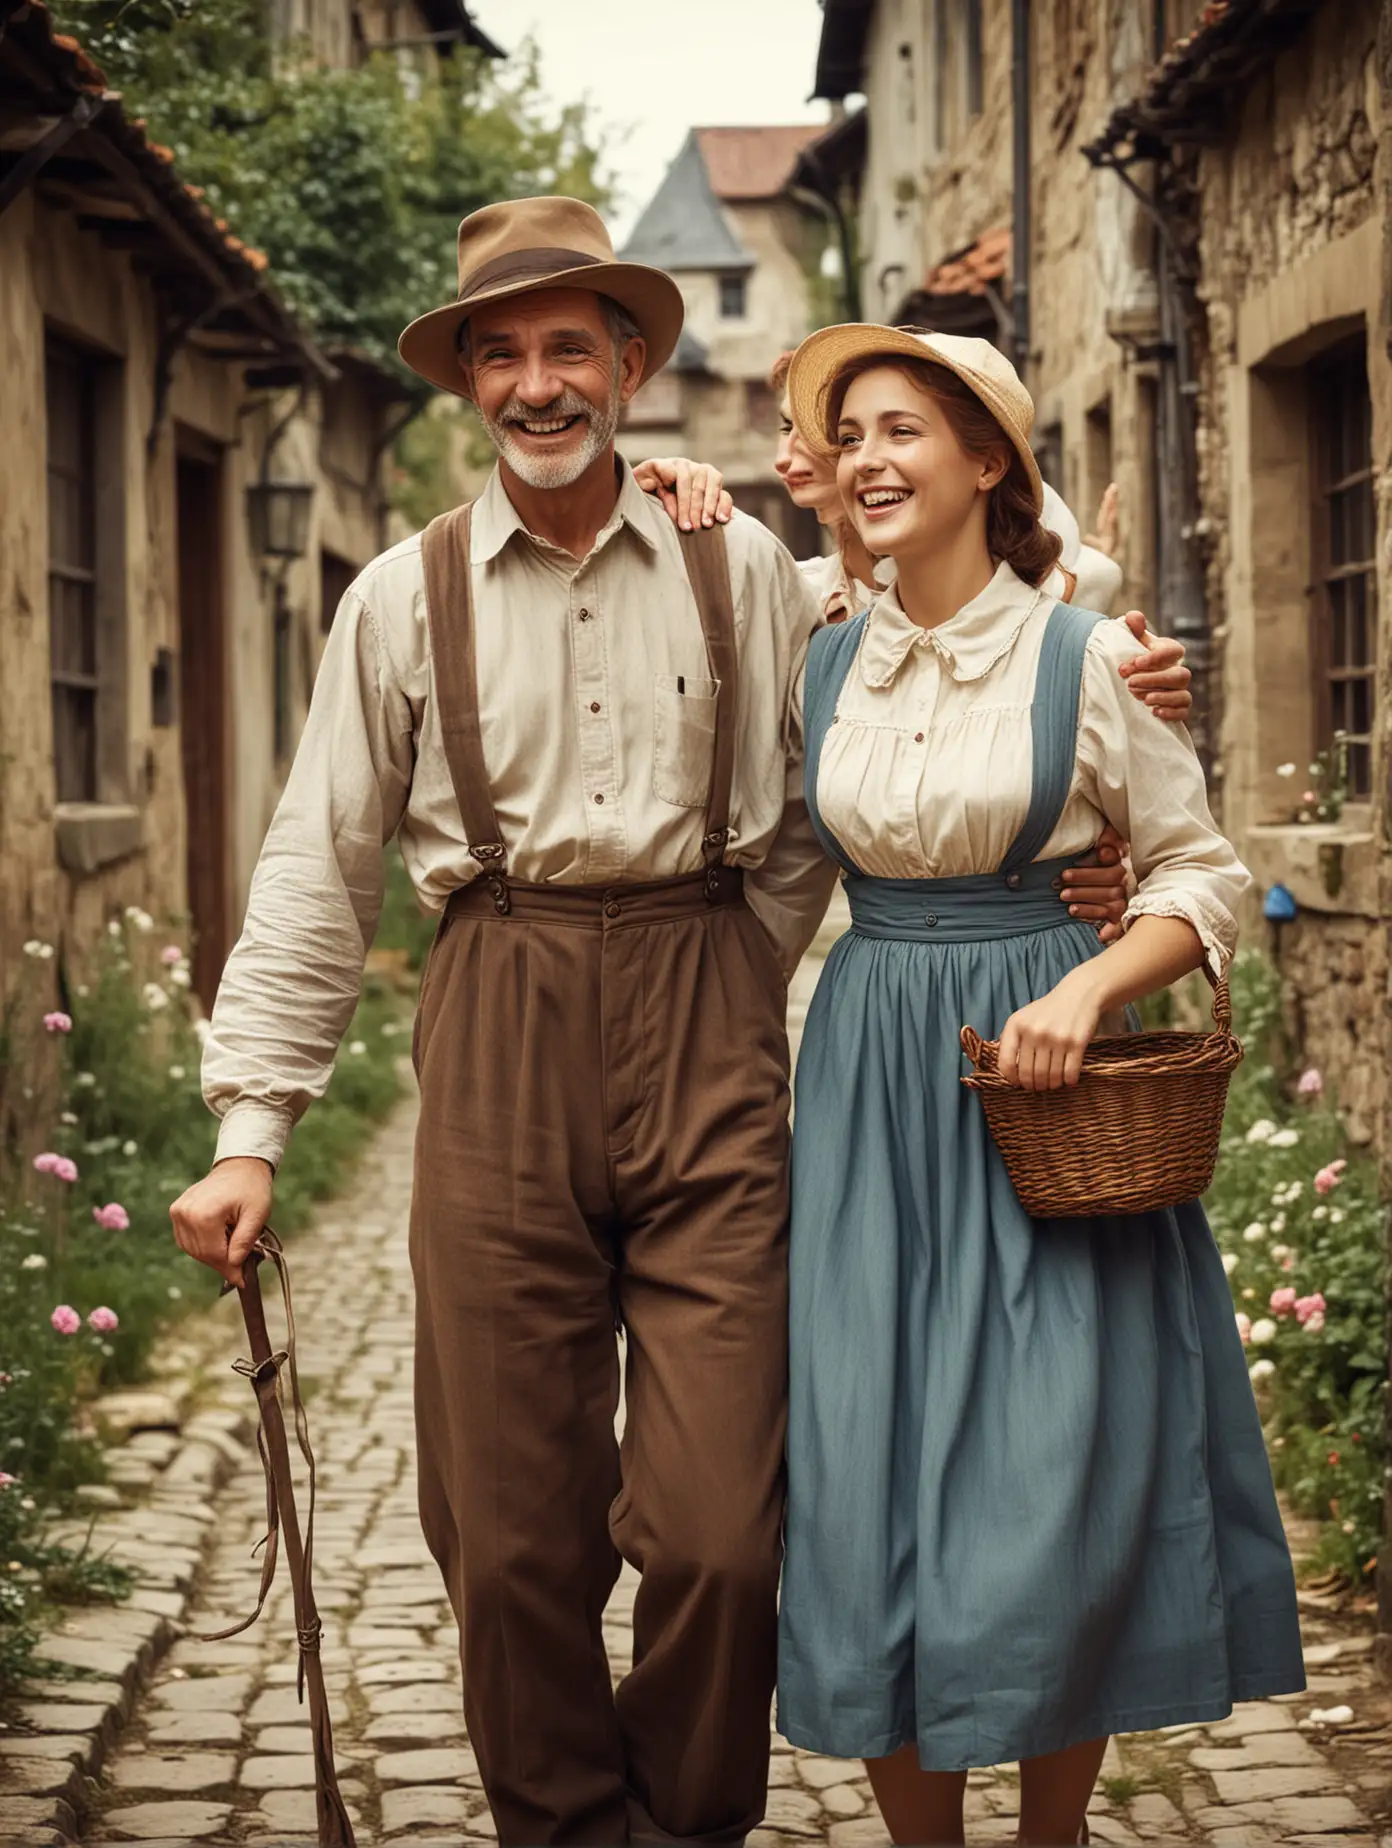 Joyful Men and Women Embracing Life in Historical Era